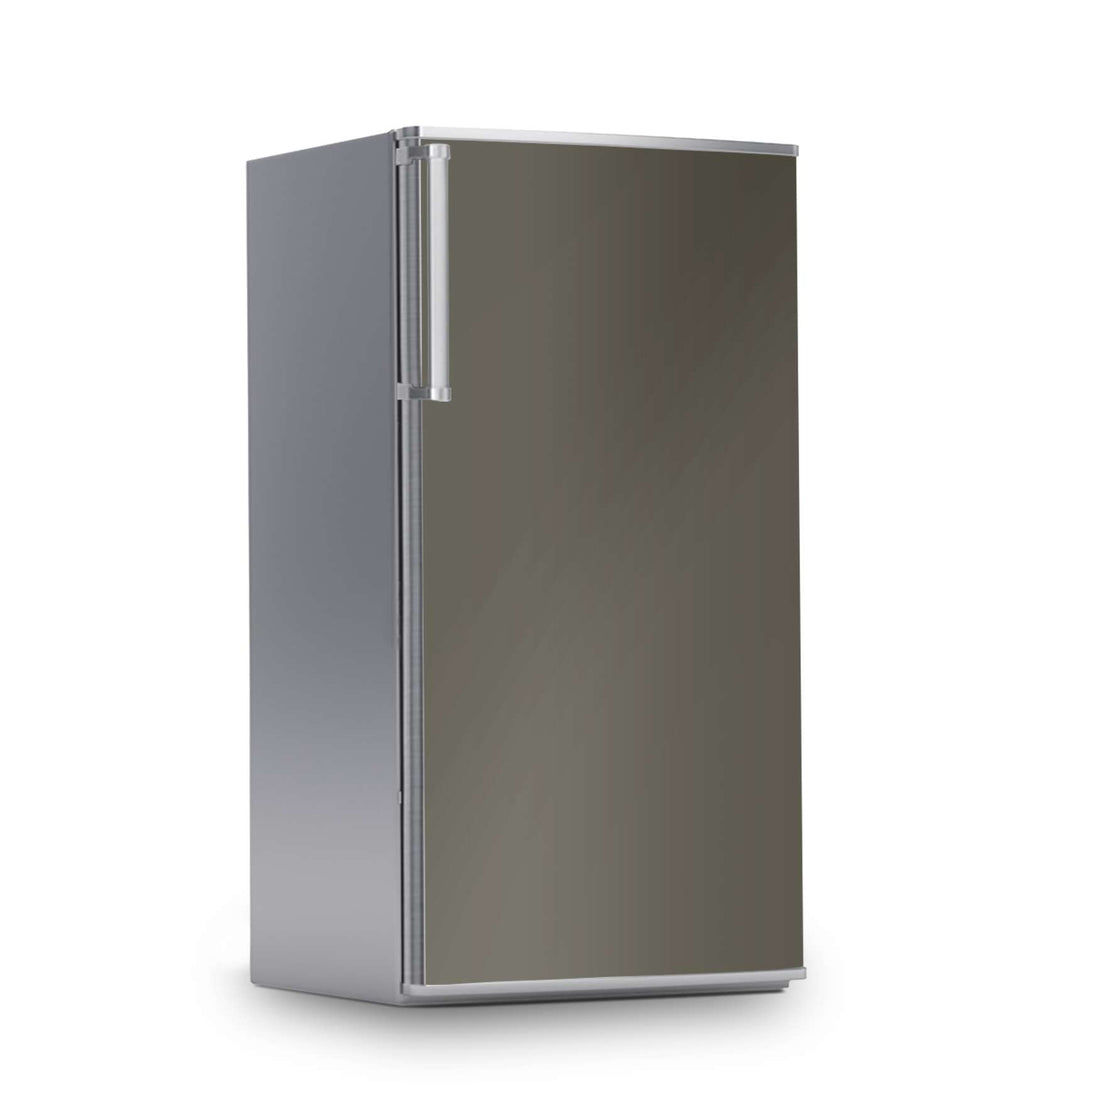 Kühlschrank Folie -Braungrau Dark- Kühlschrank 60x120 cm